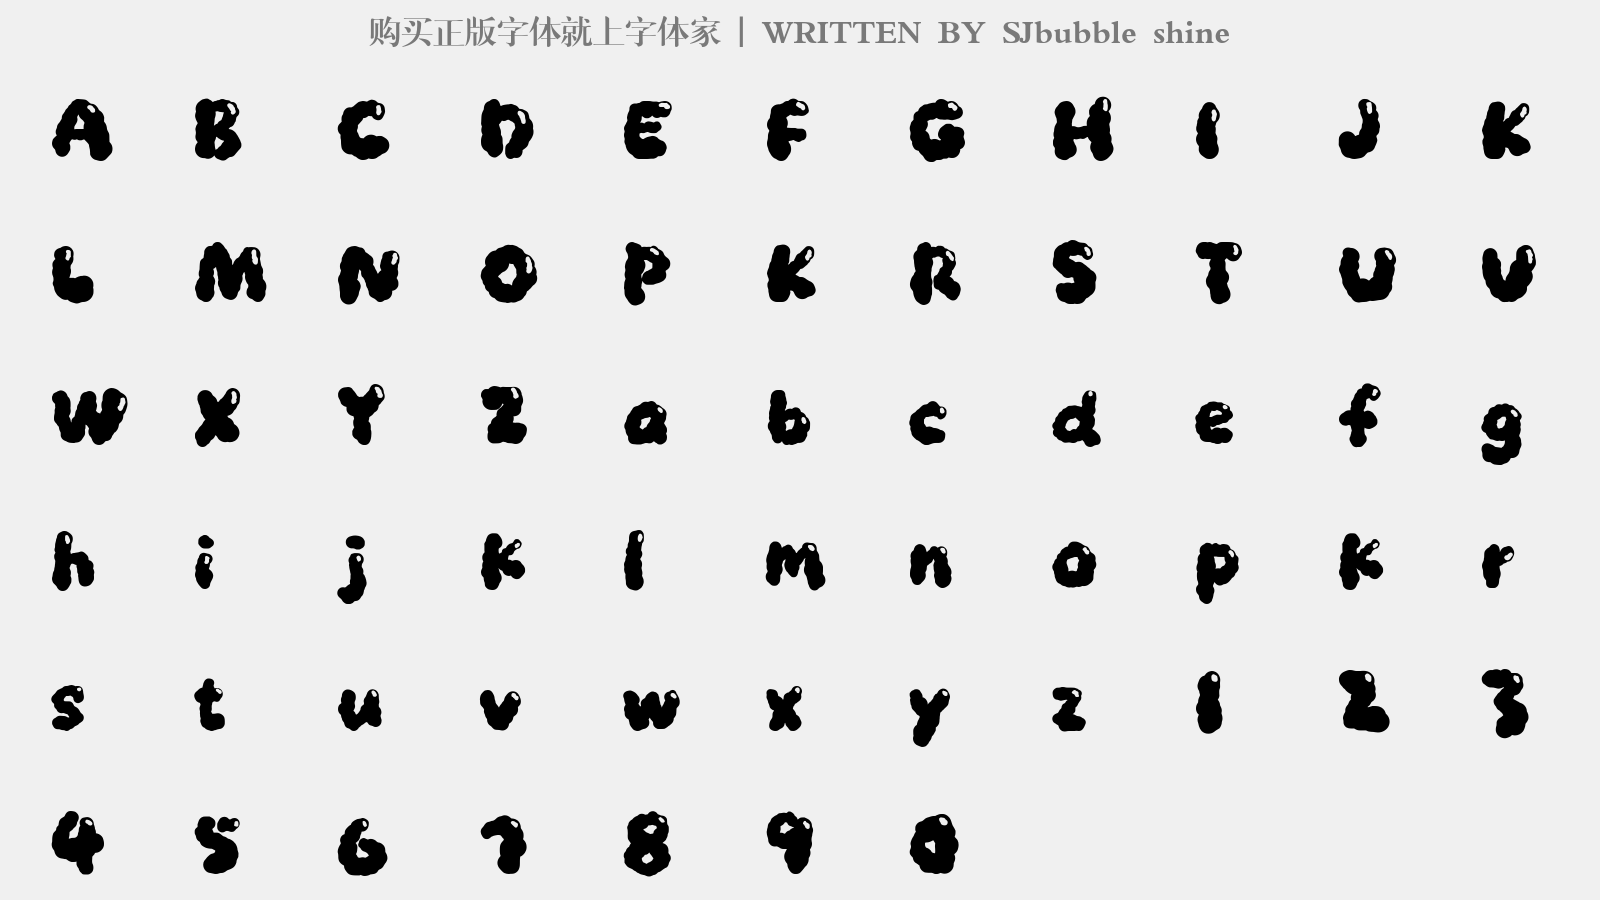 SJbubble shine - 大寫字母/小寫字母/數字